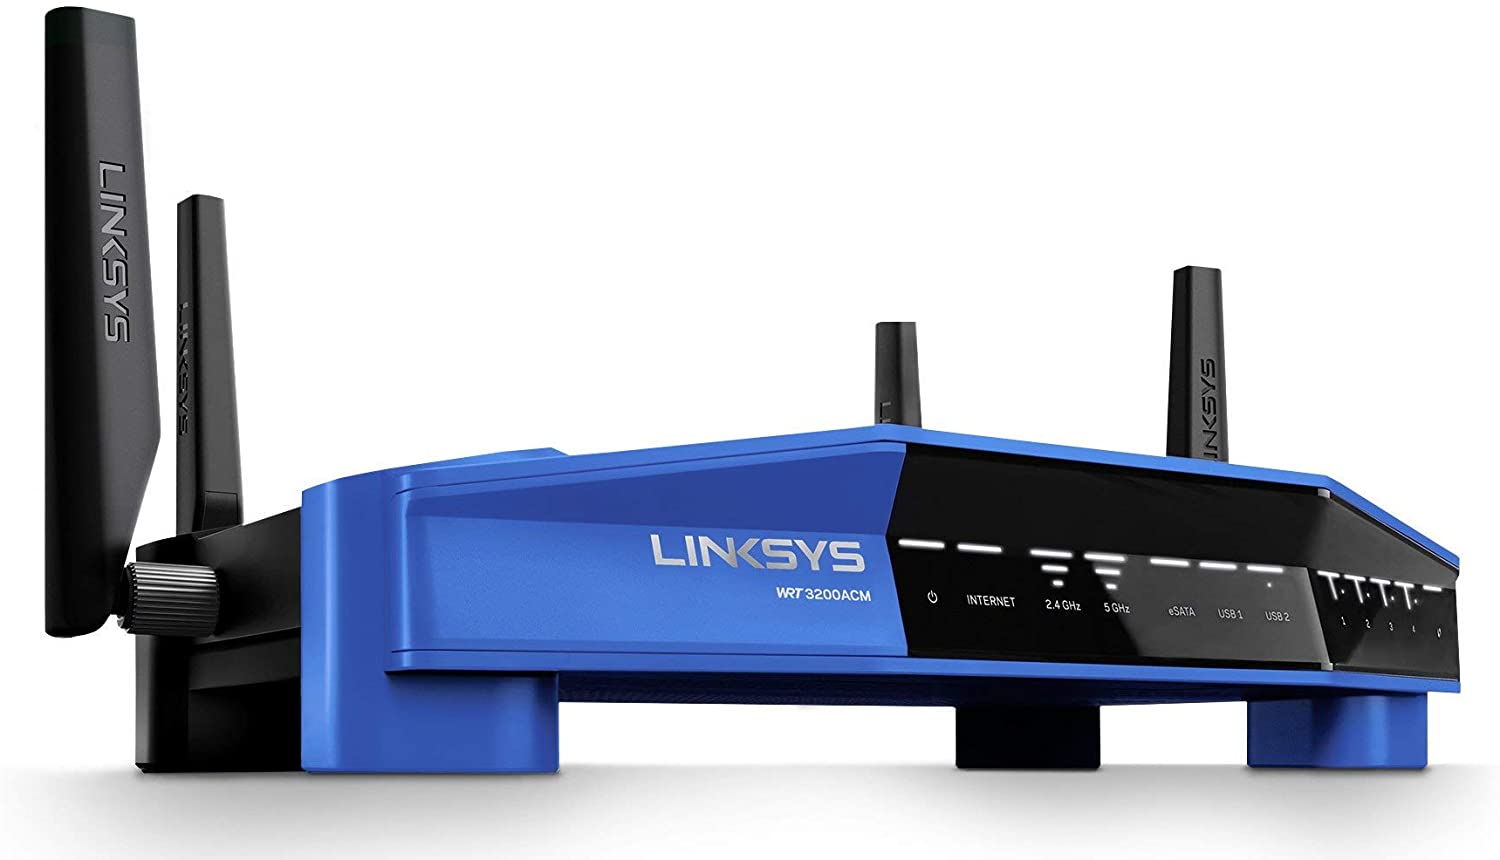 Linksys WRT3200ACM Router